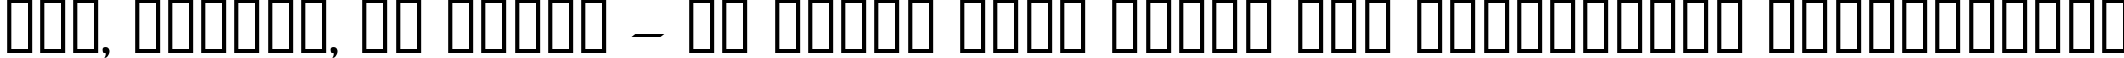 Пример написания шрифтом Dumbledor 3 Rev Italic текста на украинском